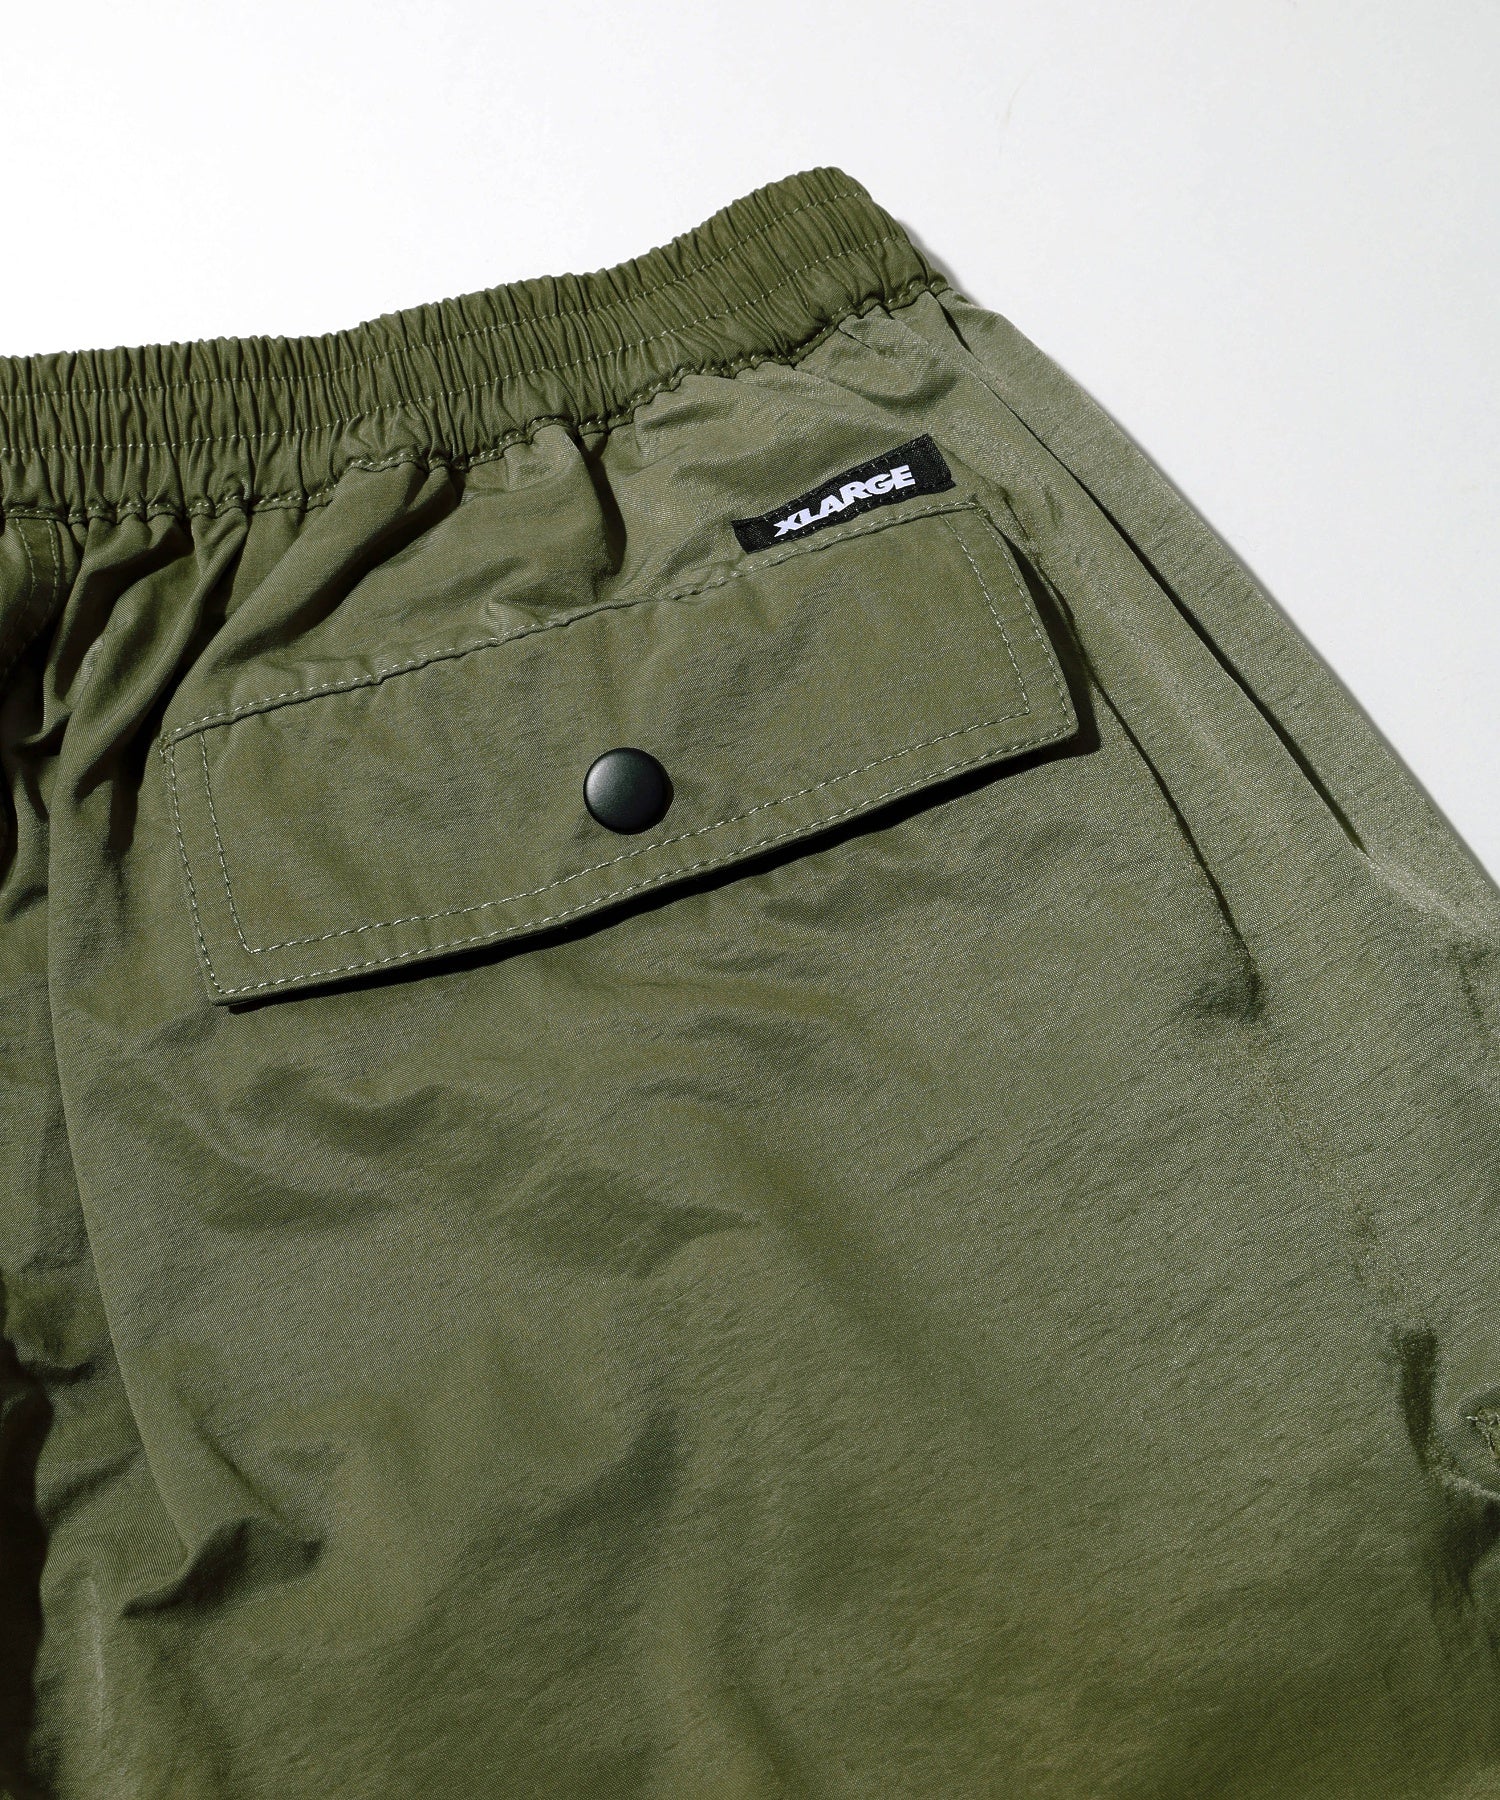 Women Combat Cargo Pants Multi-Pocket Casual Long Pants Loose Trousers  Joggers